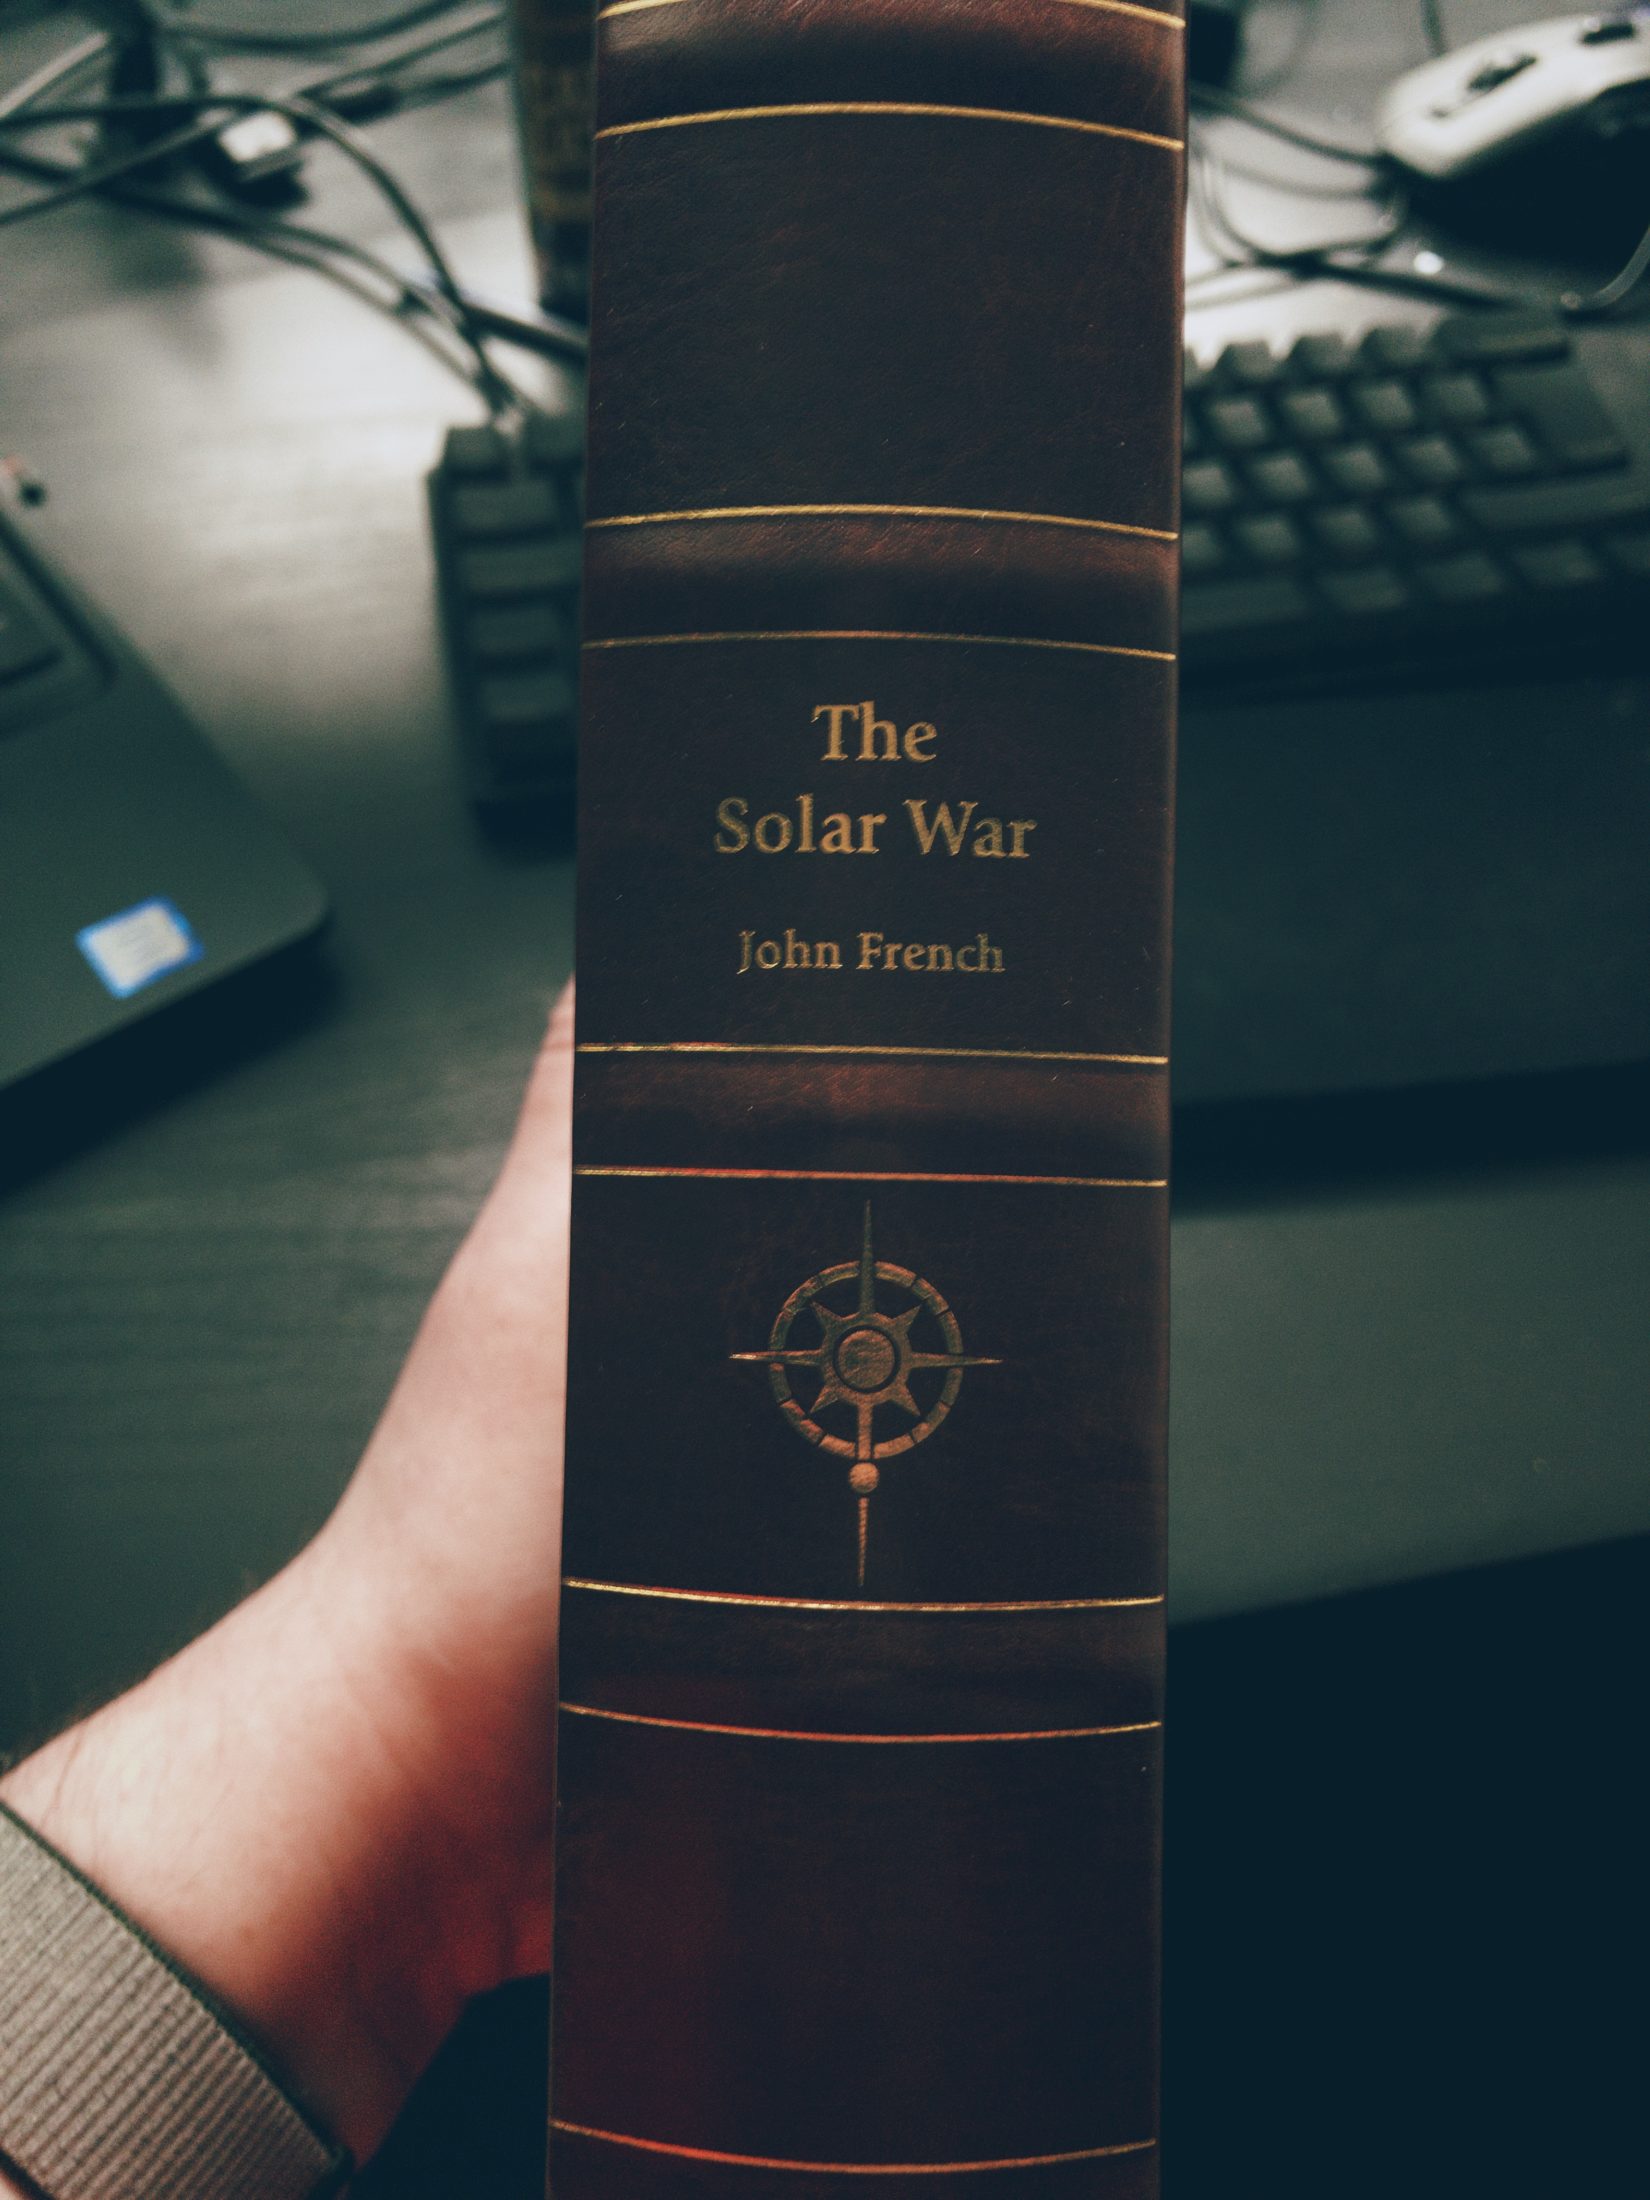 The Solar War spine